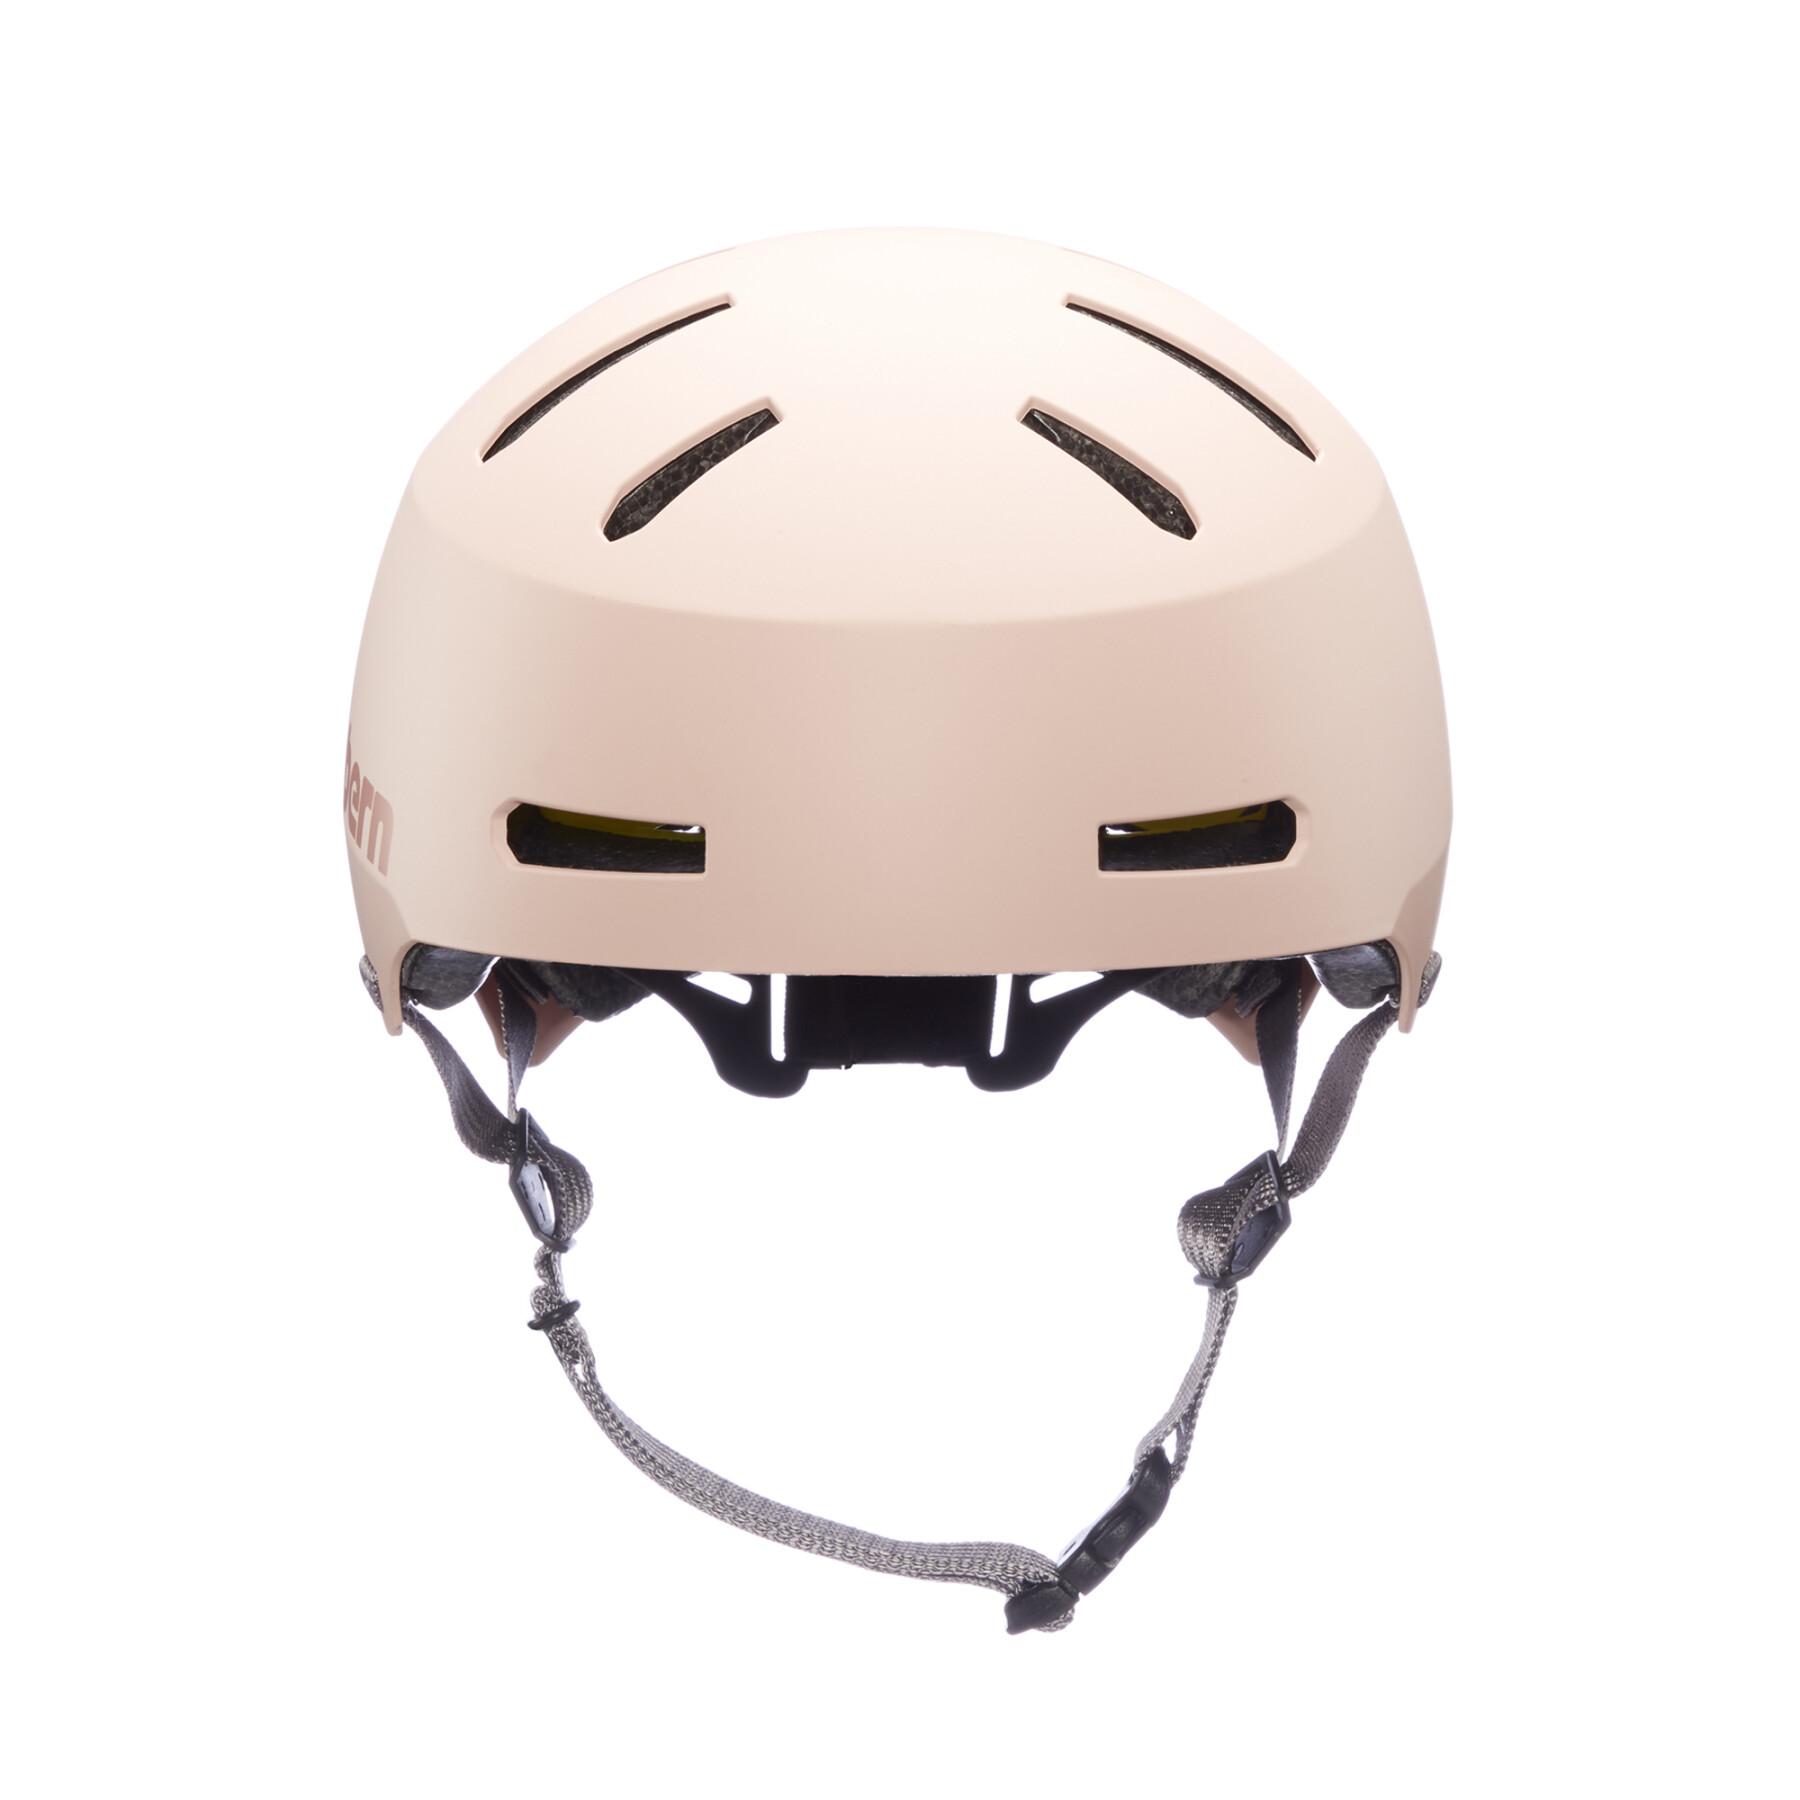 helmet Bern Macon 2.0 MIPS